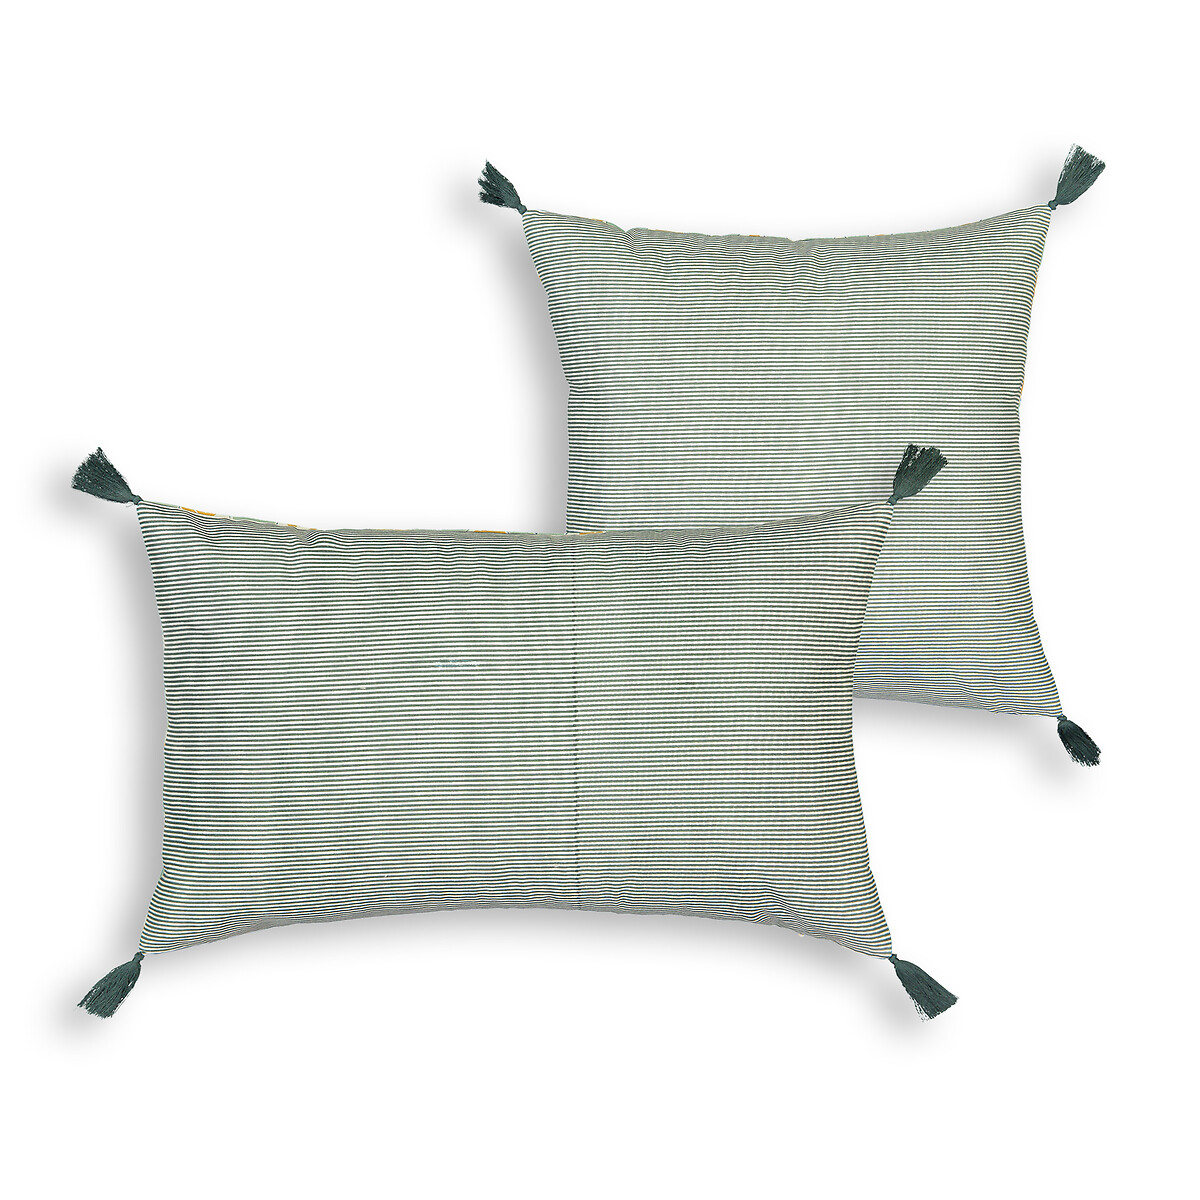 Чехол LaRedoute На подушку из 100 стираного хлопка Cilou 40 x 40 см зеленый, размер 40 x 40 см - фото 2